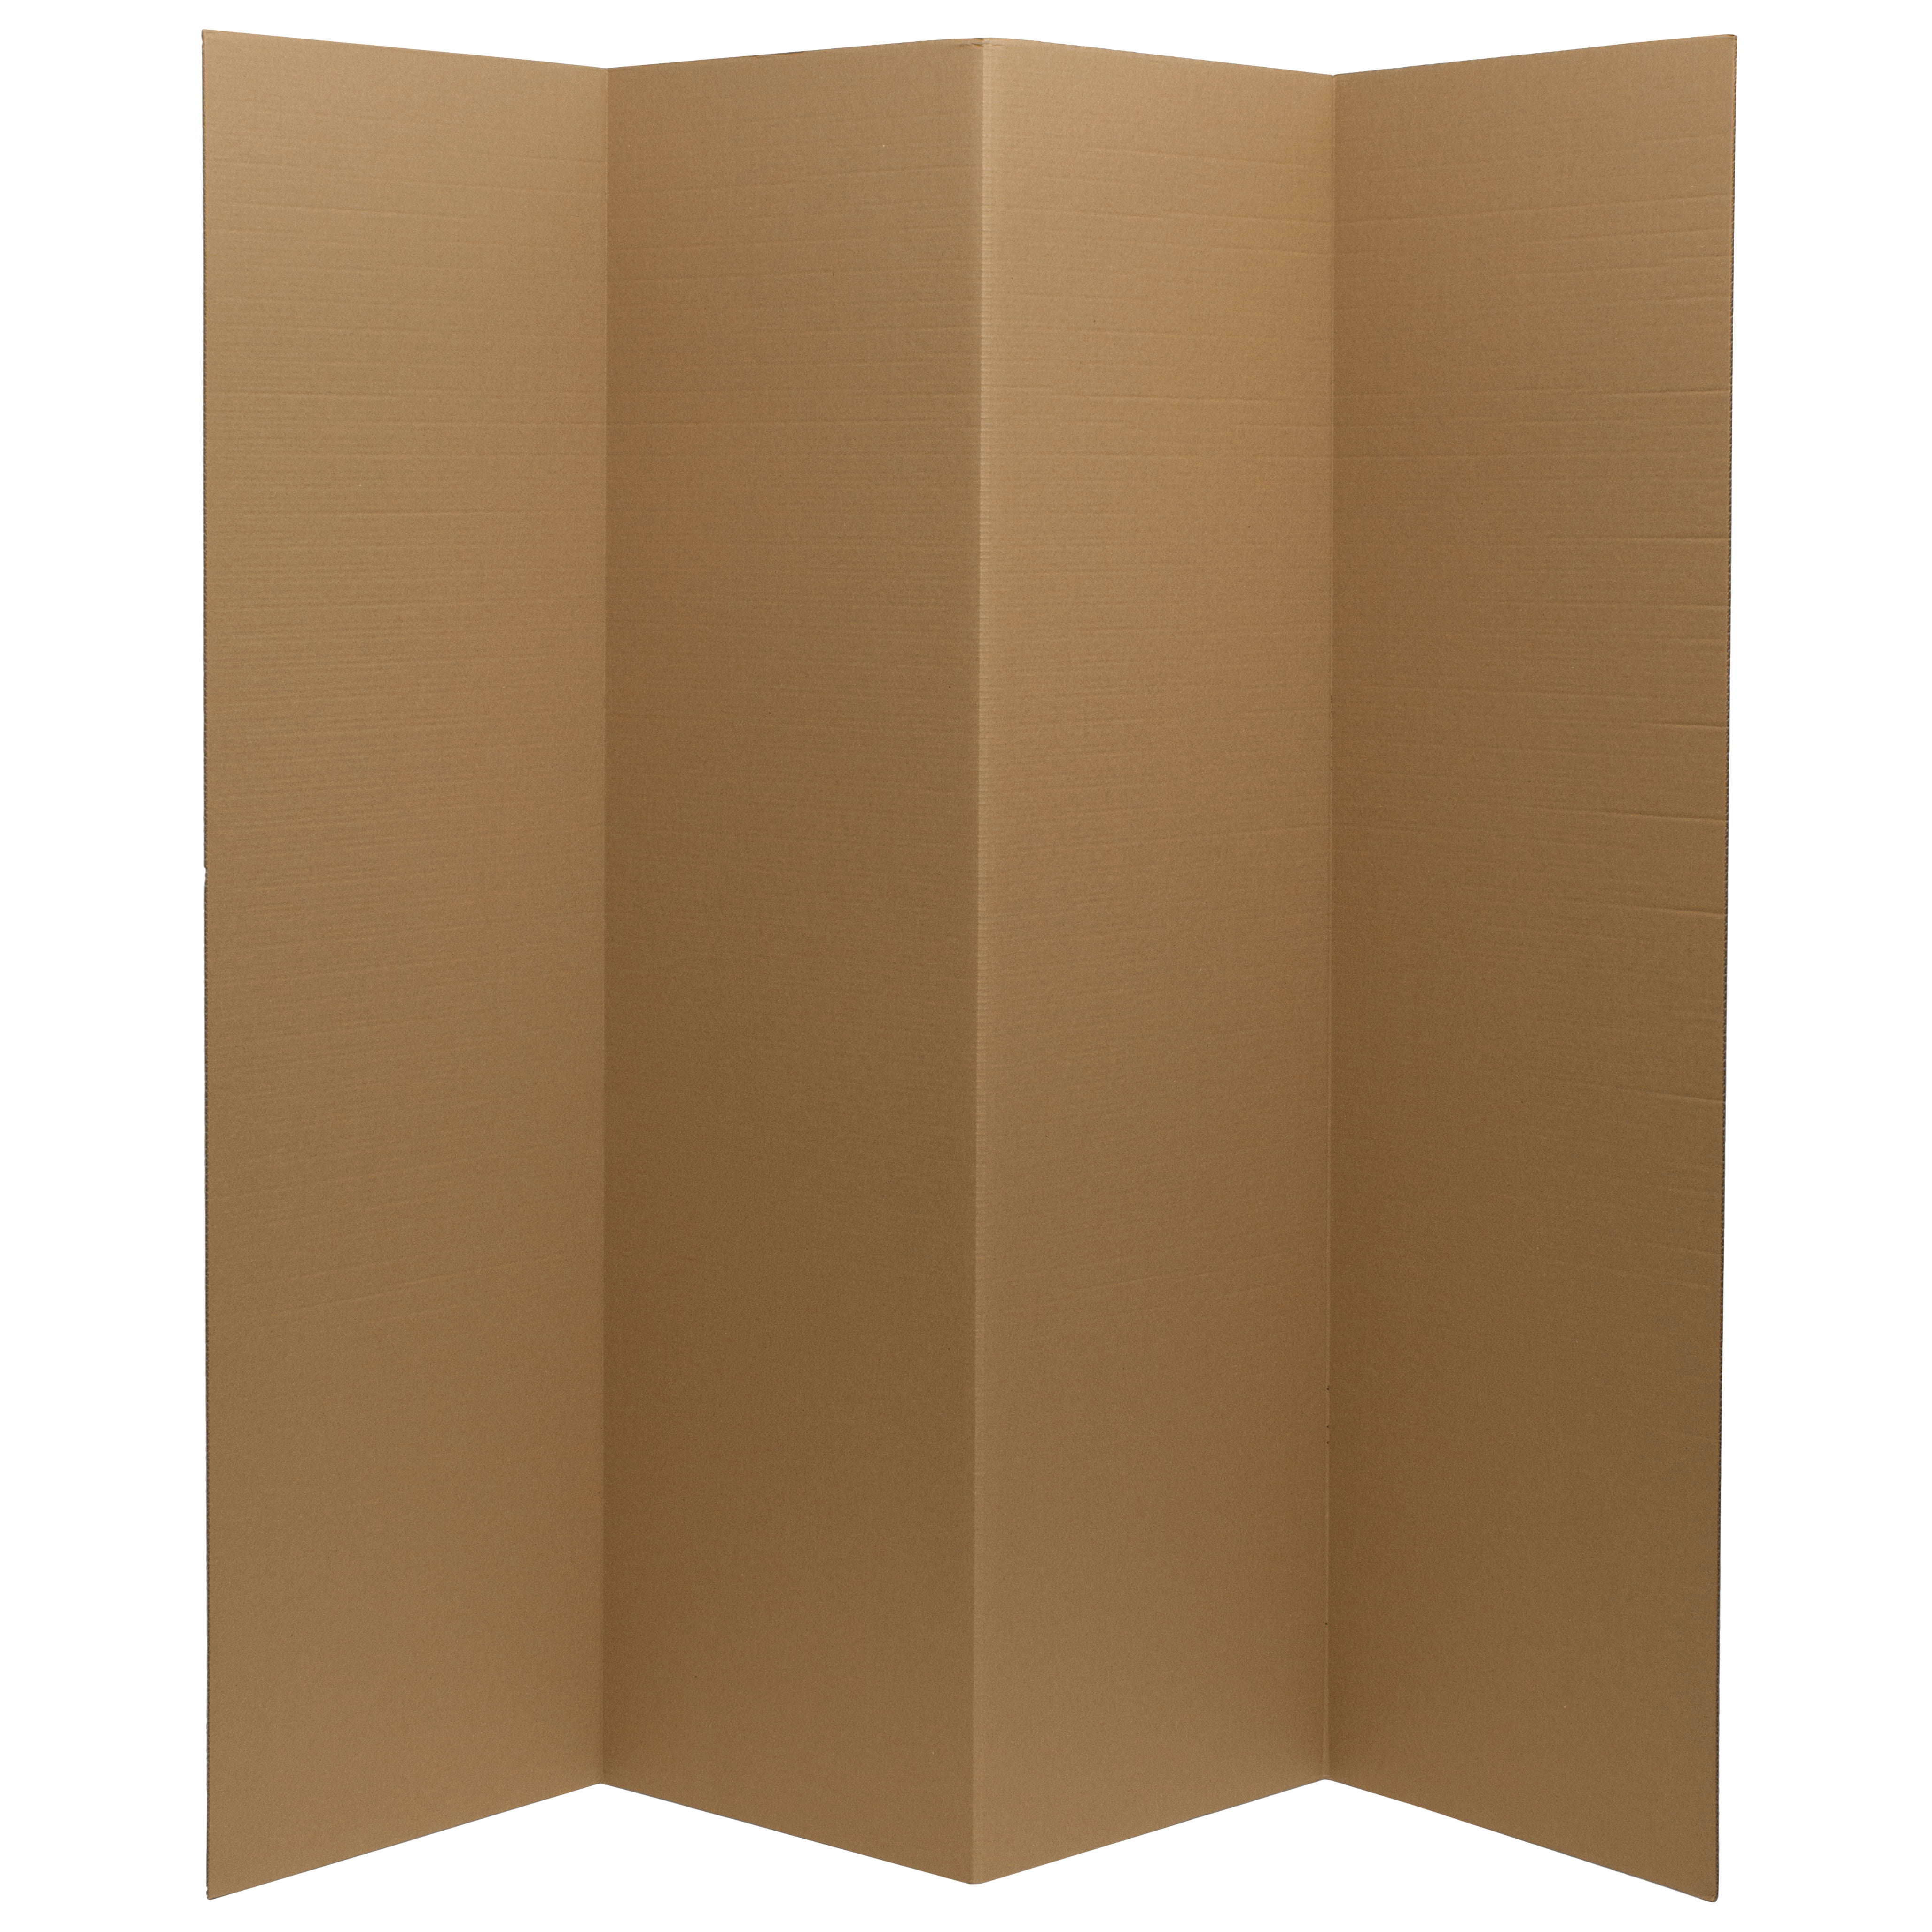 ORIENTAL Furniture 6 ft 4 Panel Tall Brown Cardboard Room Divider